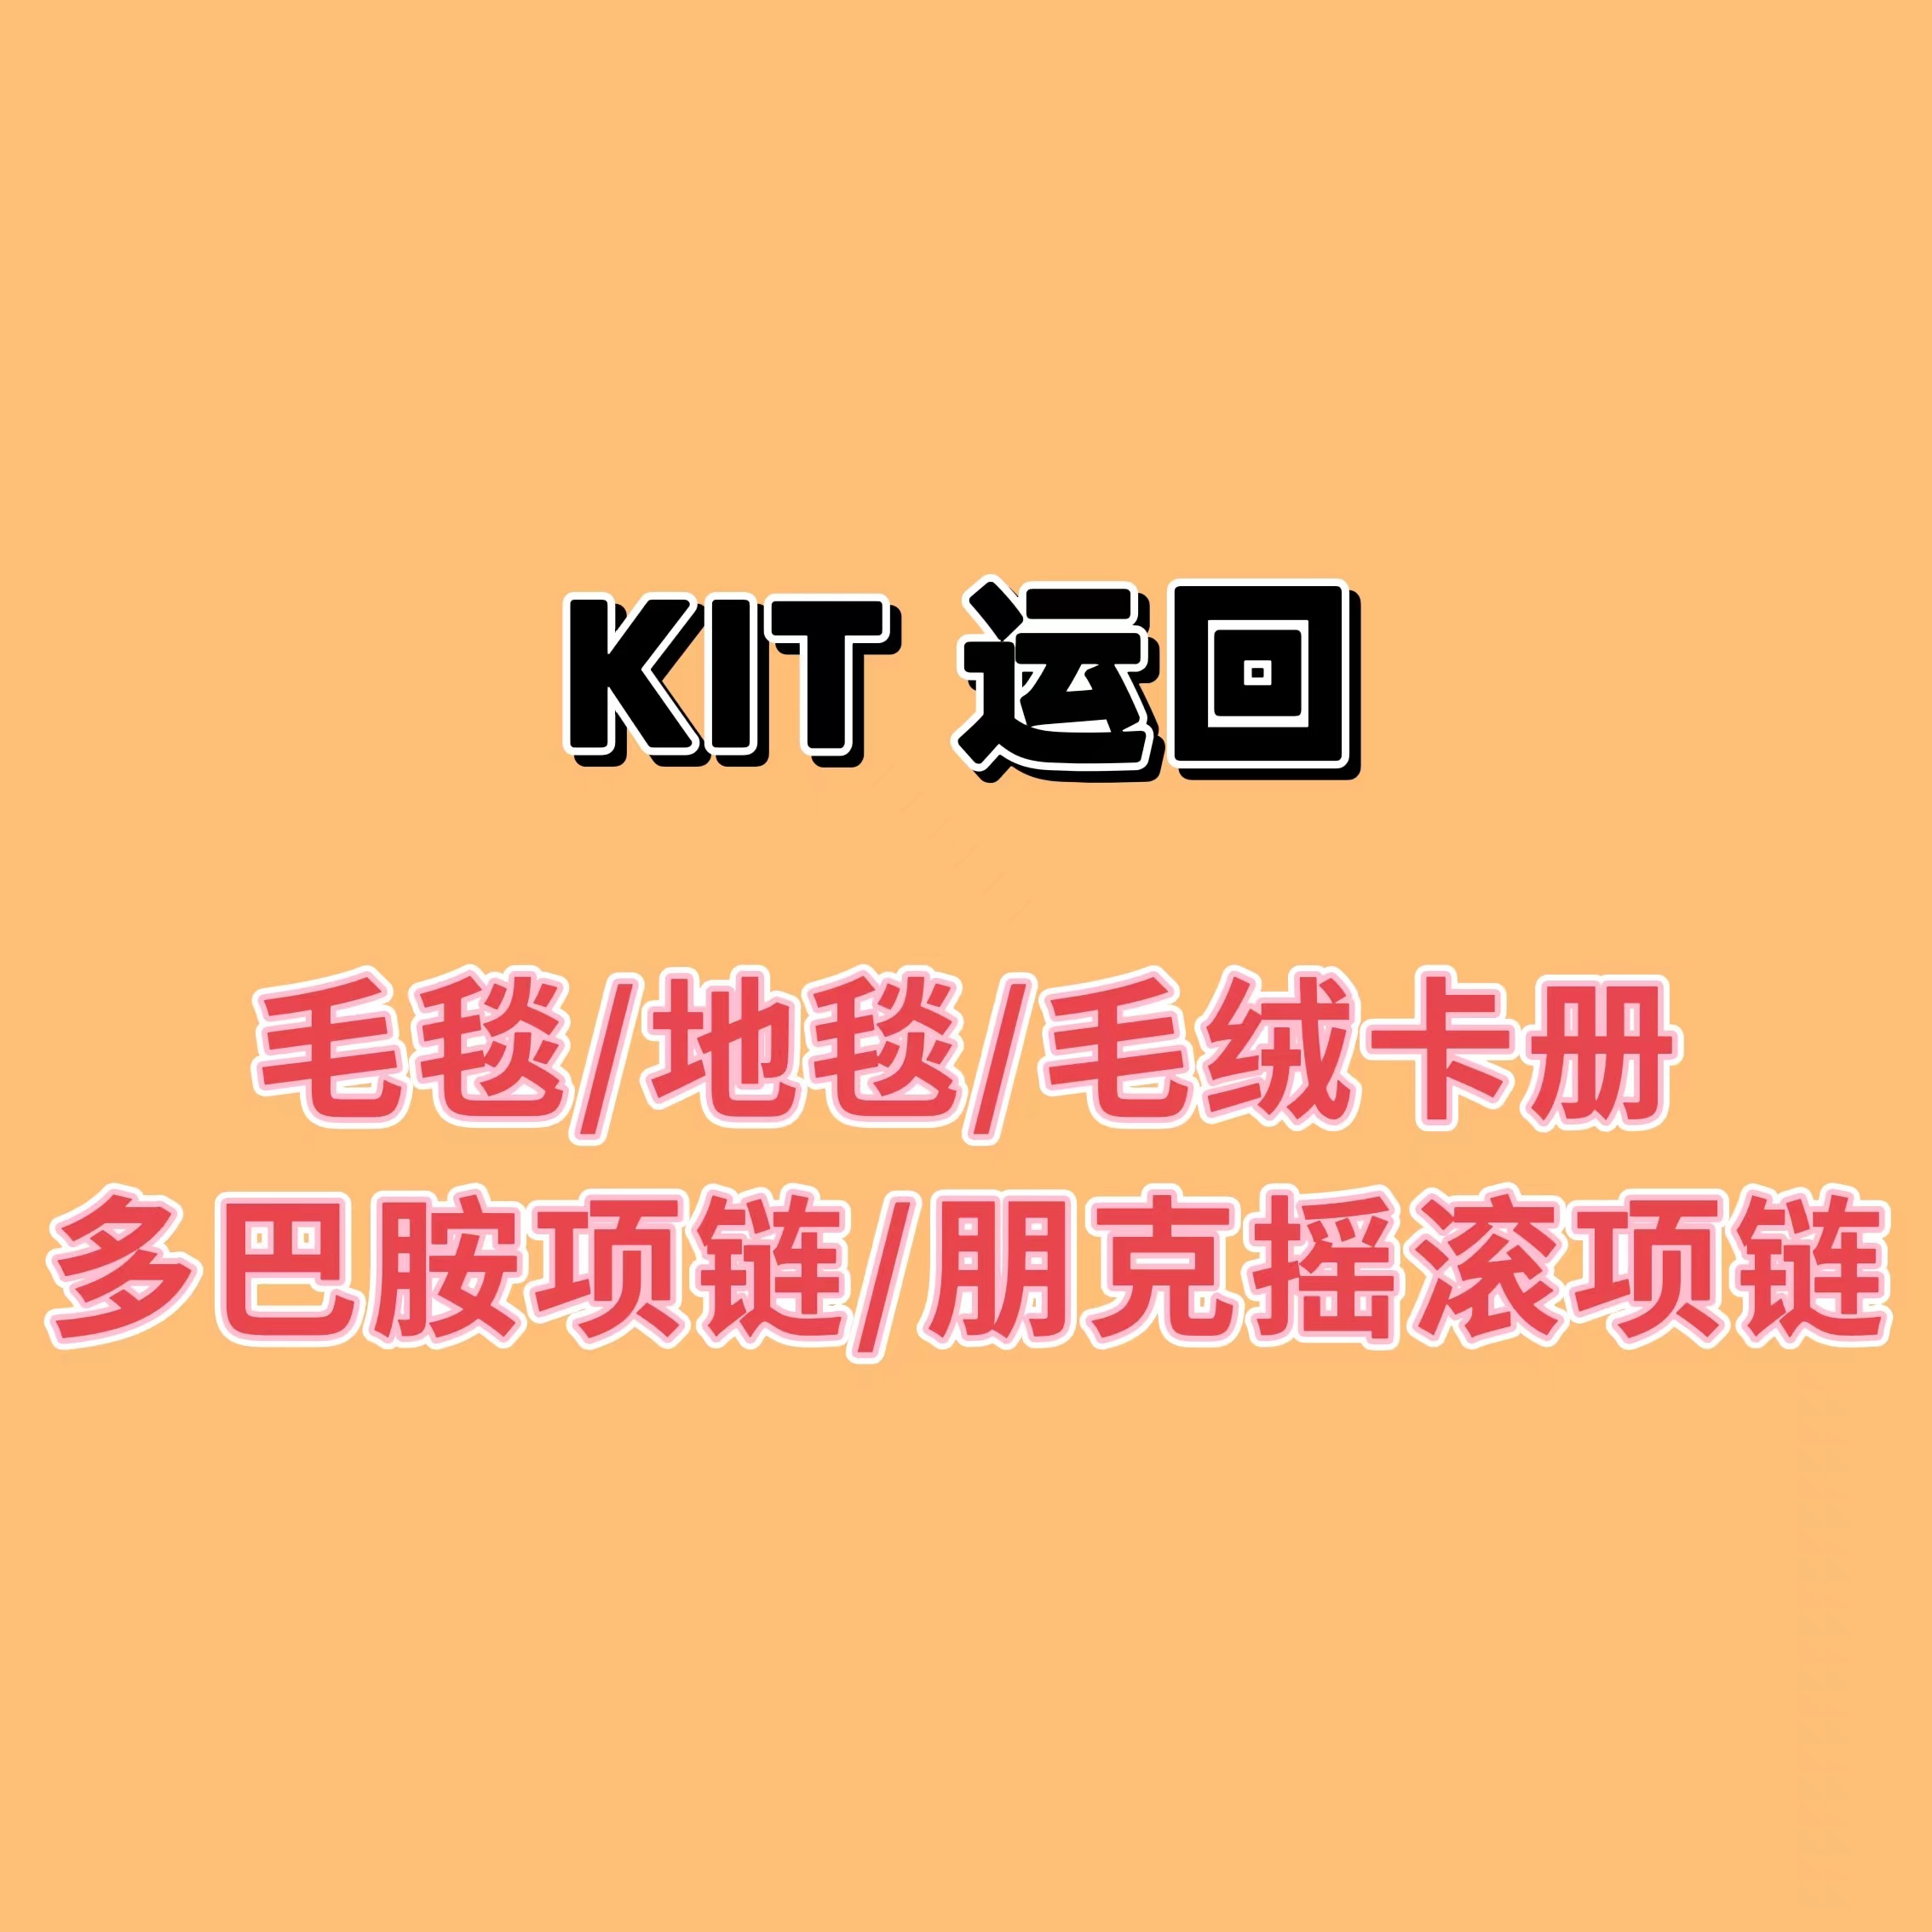 [全款 KIT特典专] [Ktown4u Special Gift] TREASURE - 2ND FULL ALBUM [REBOOT] KiT ALBUM_YOSHINORI·金本芳典